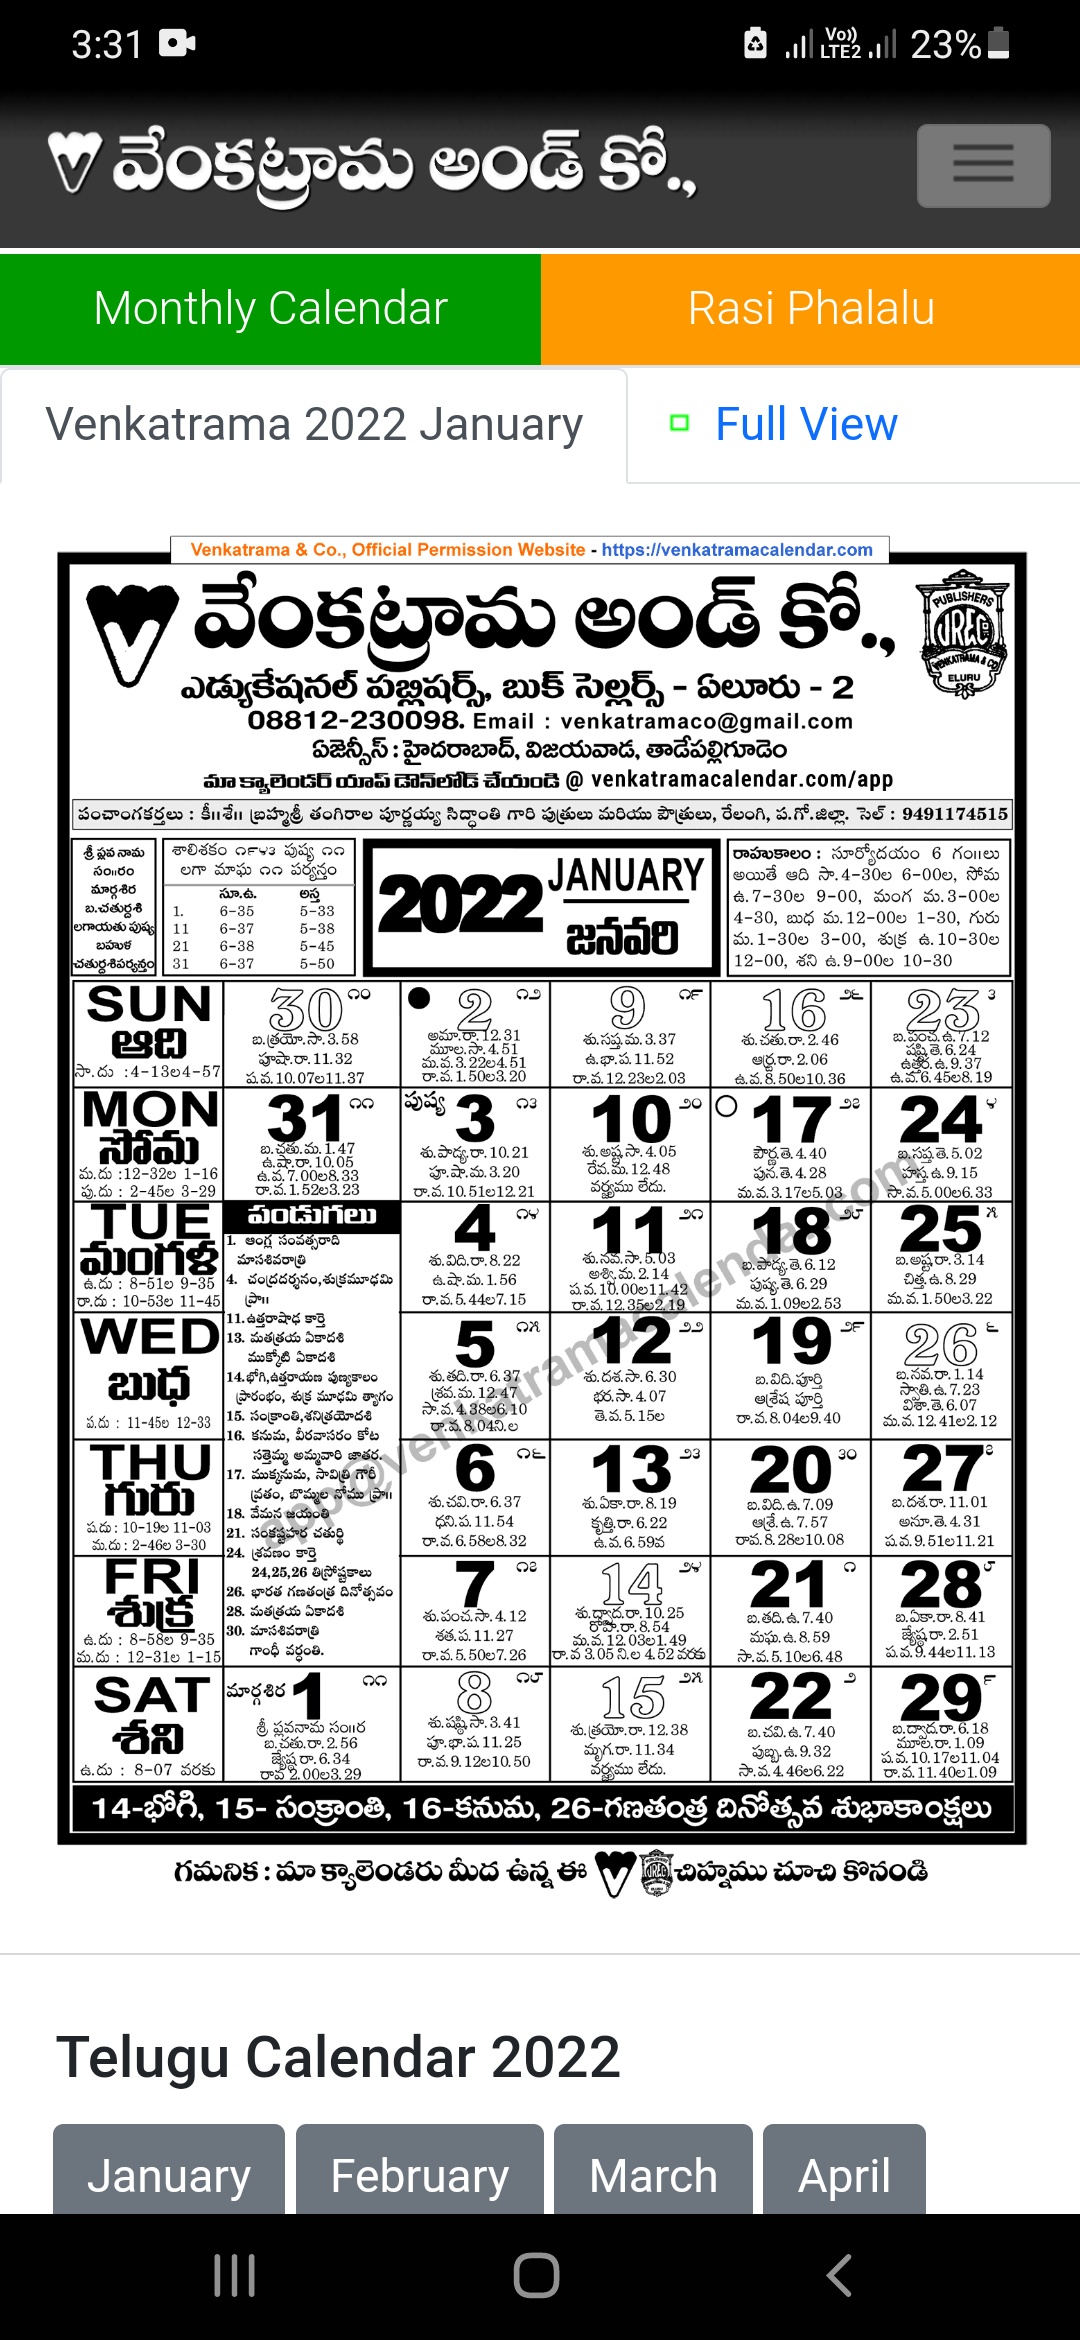 Venkatrama Co 2019 December Telugu Calendar Venkatram vrogue.co